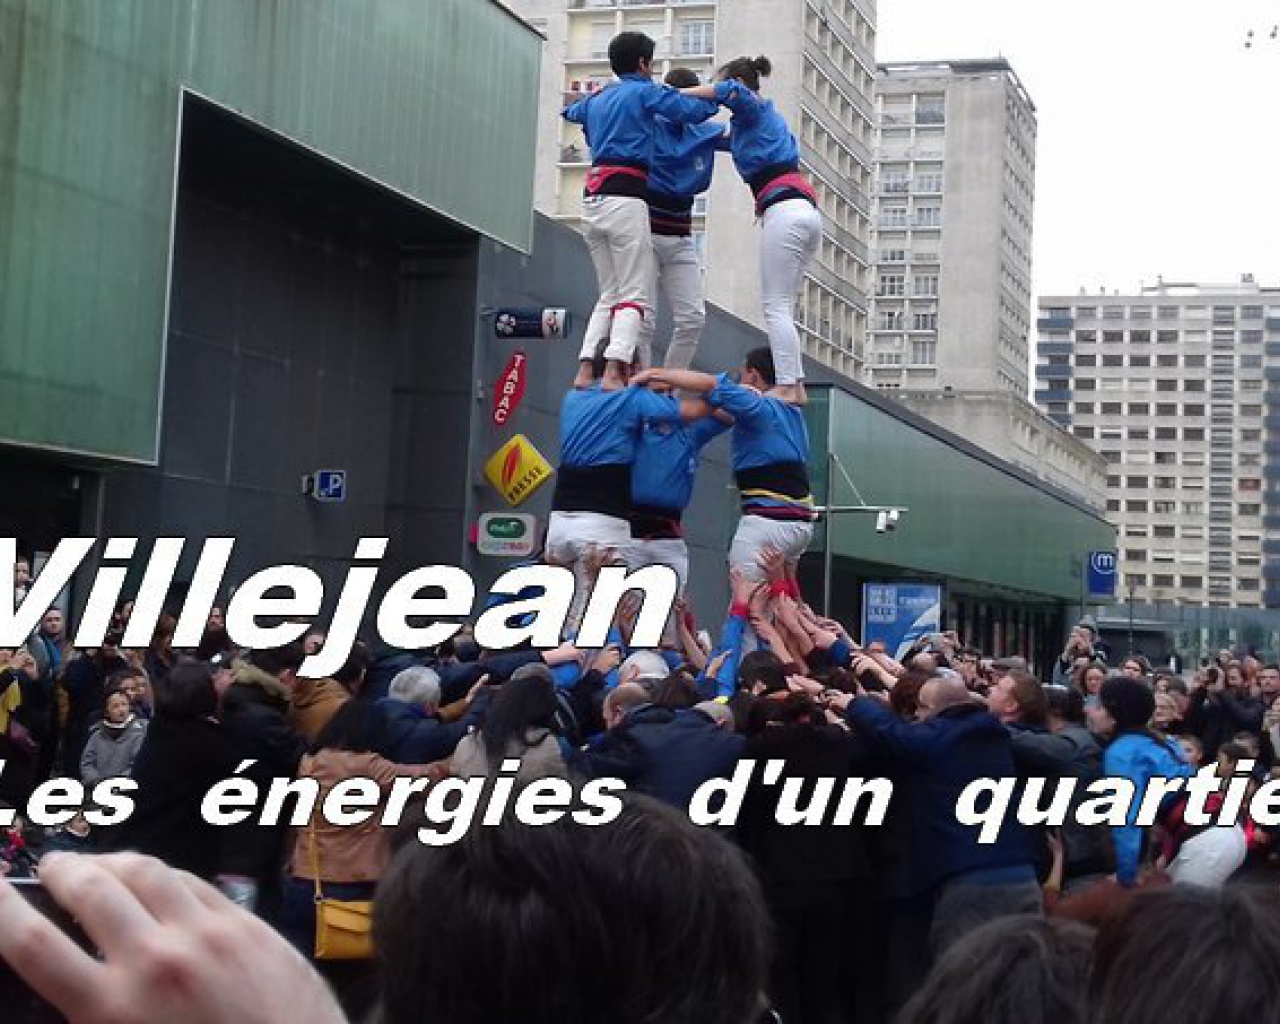 Villejean, les énergies d'un quartier